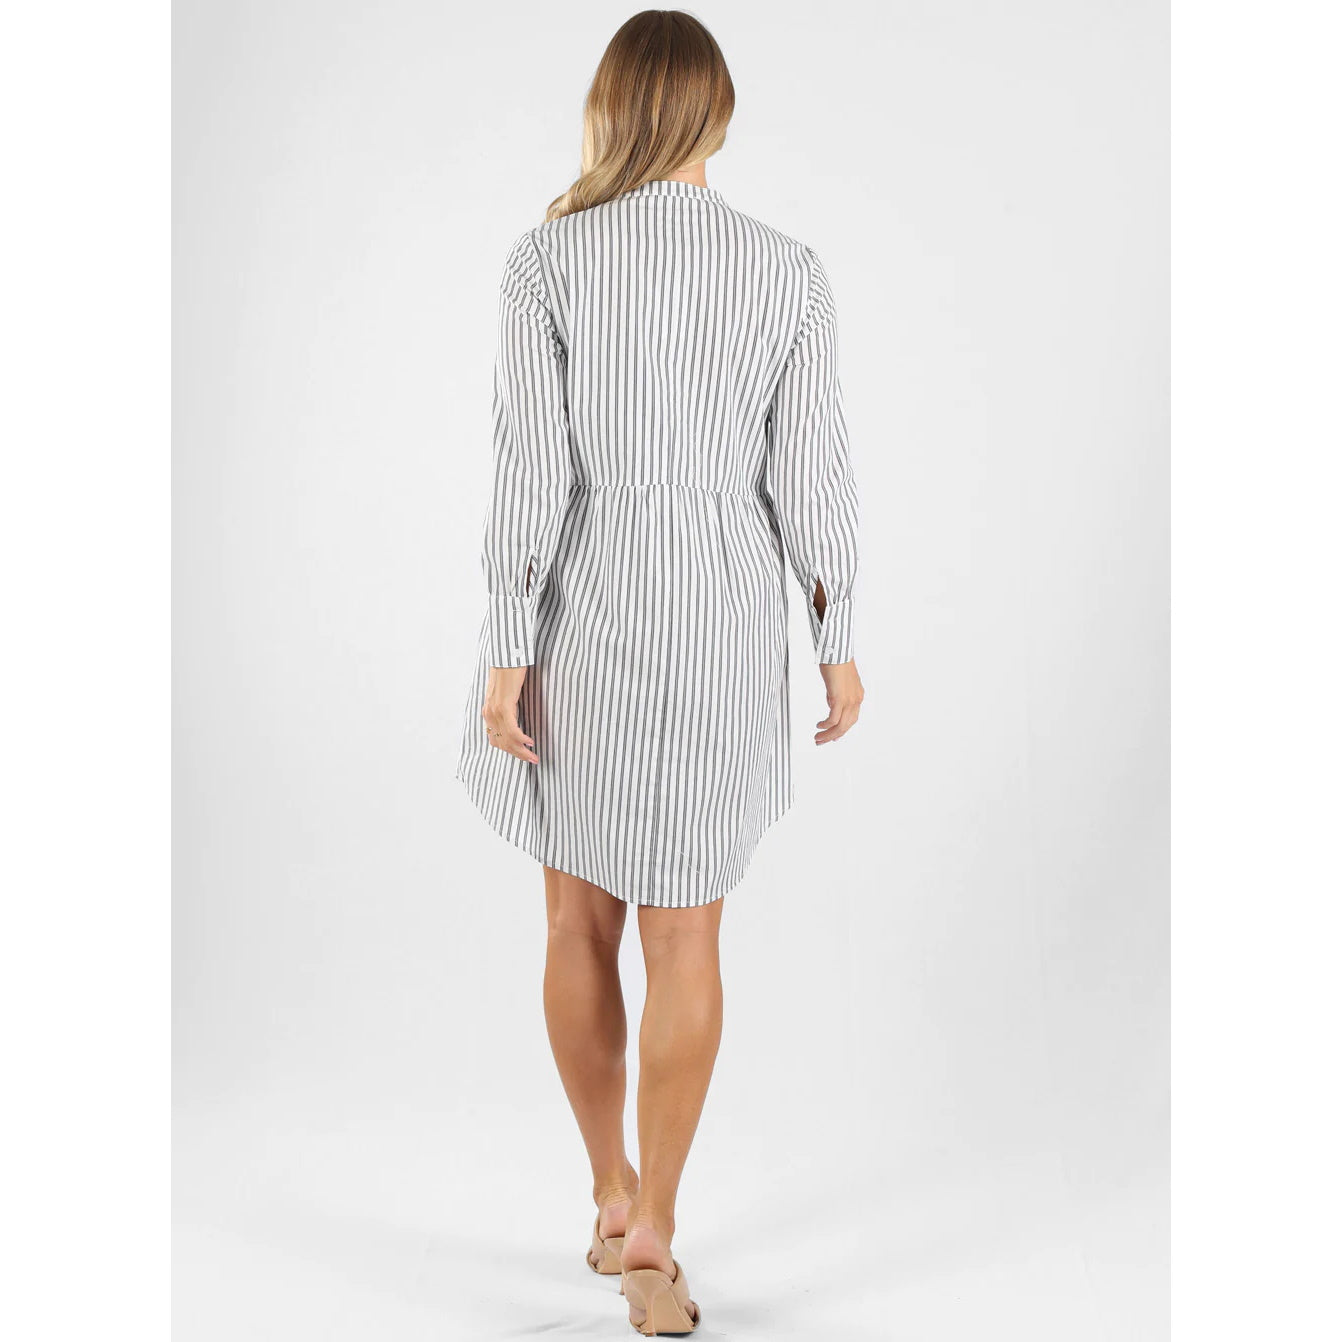 Iris Maternity & Nursing Dress - Navy Stripes (Small)